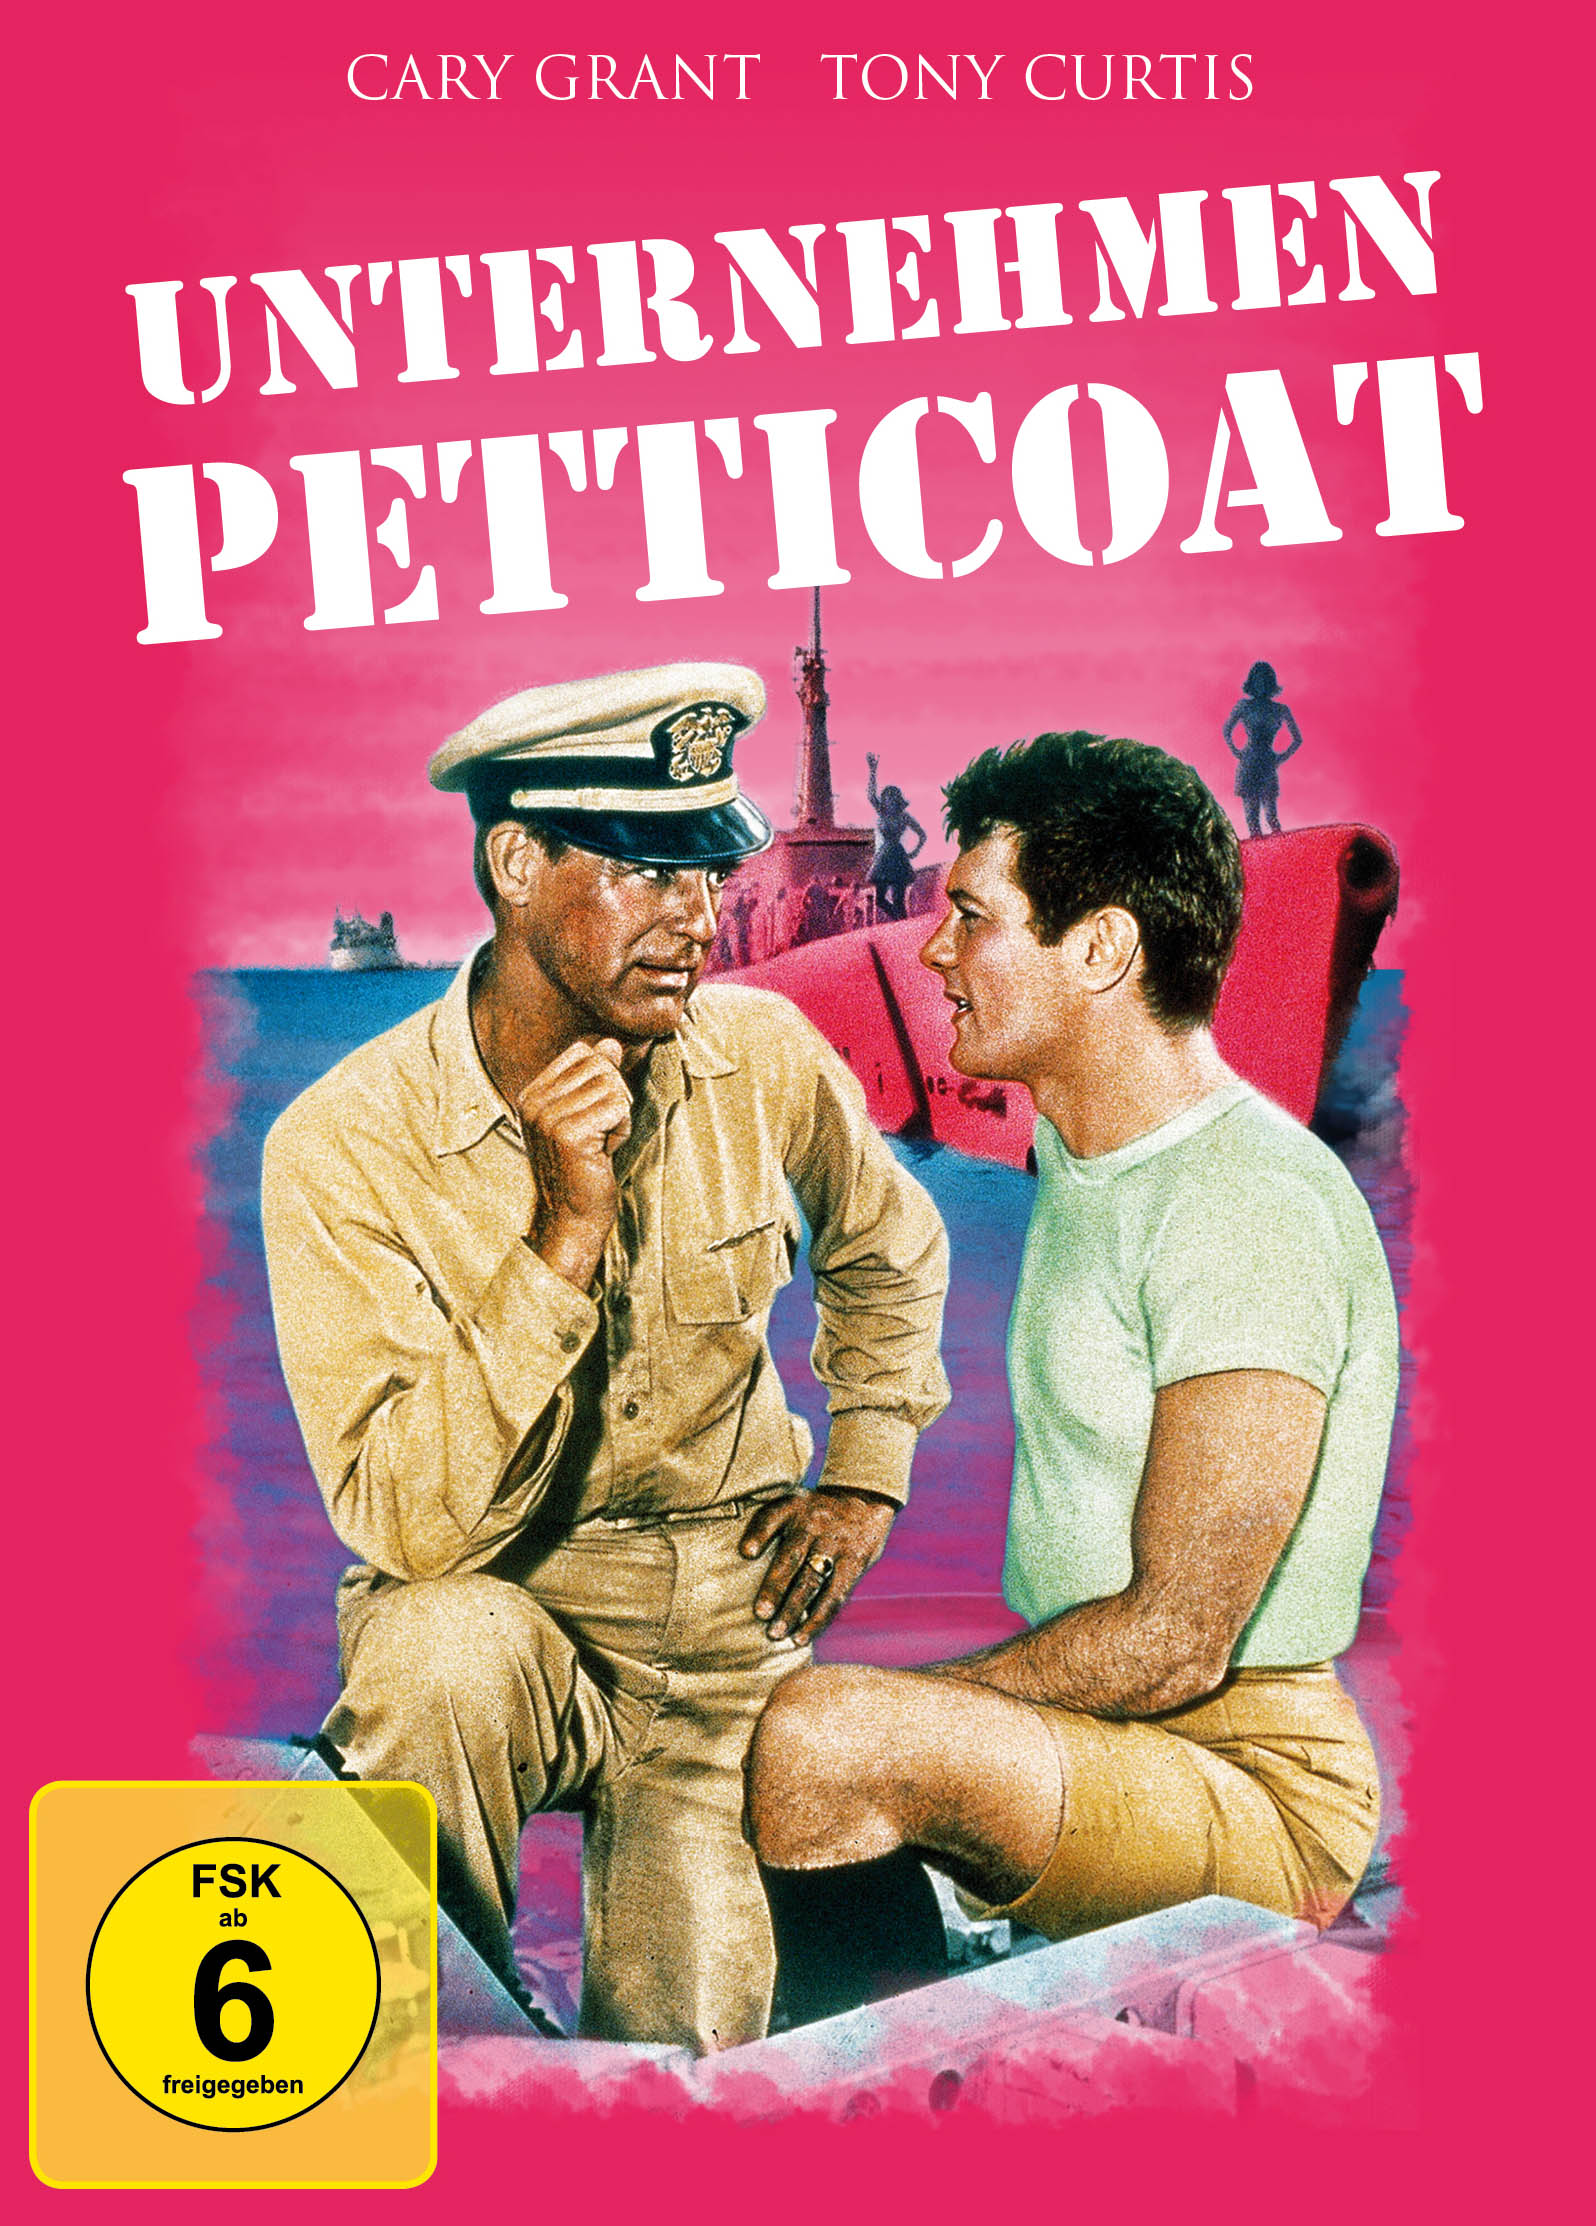 Unternehmen + Blu-ray Petticoat DVD